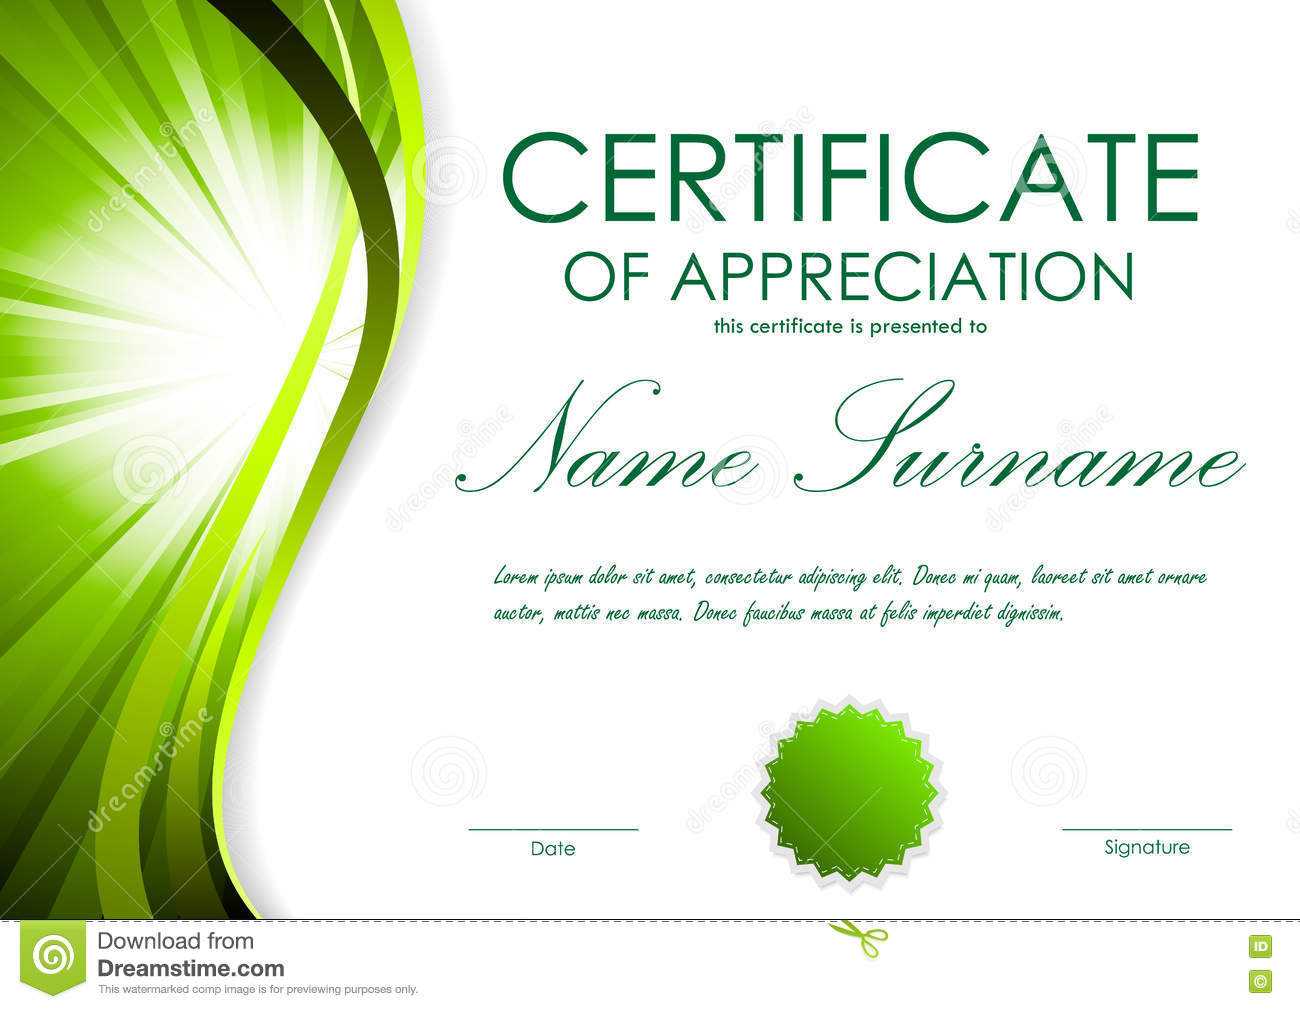 Certificate Of Appreciation Template Stock Vector For Free Certificate Of Appreciation Template Downloads